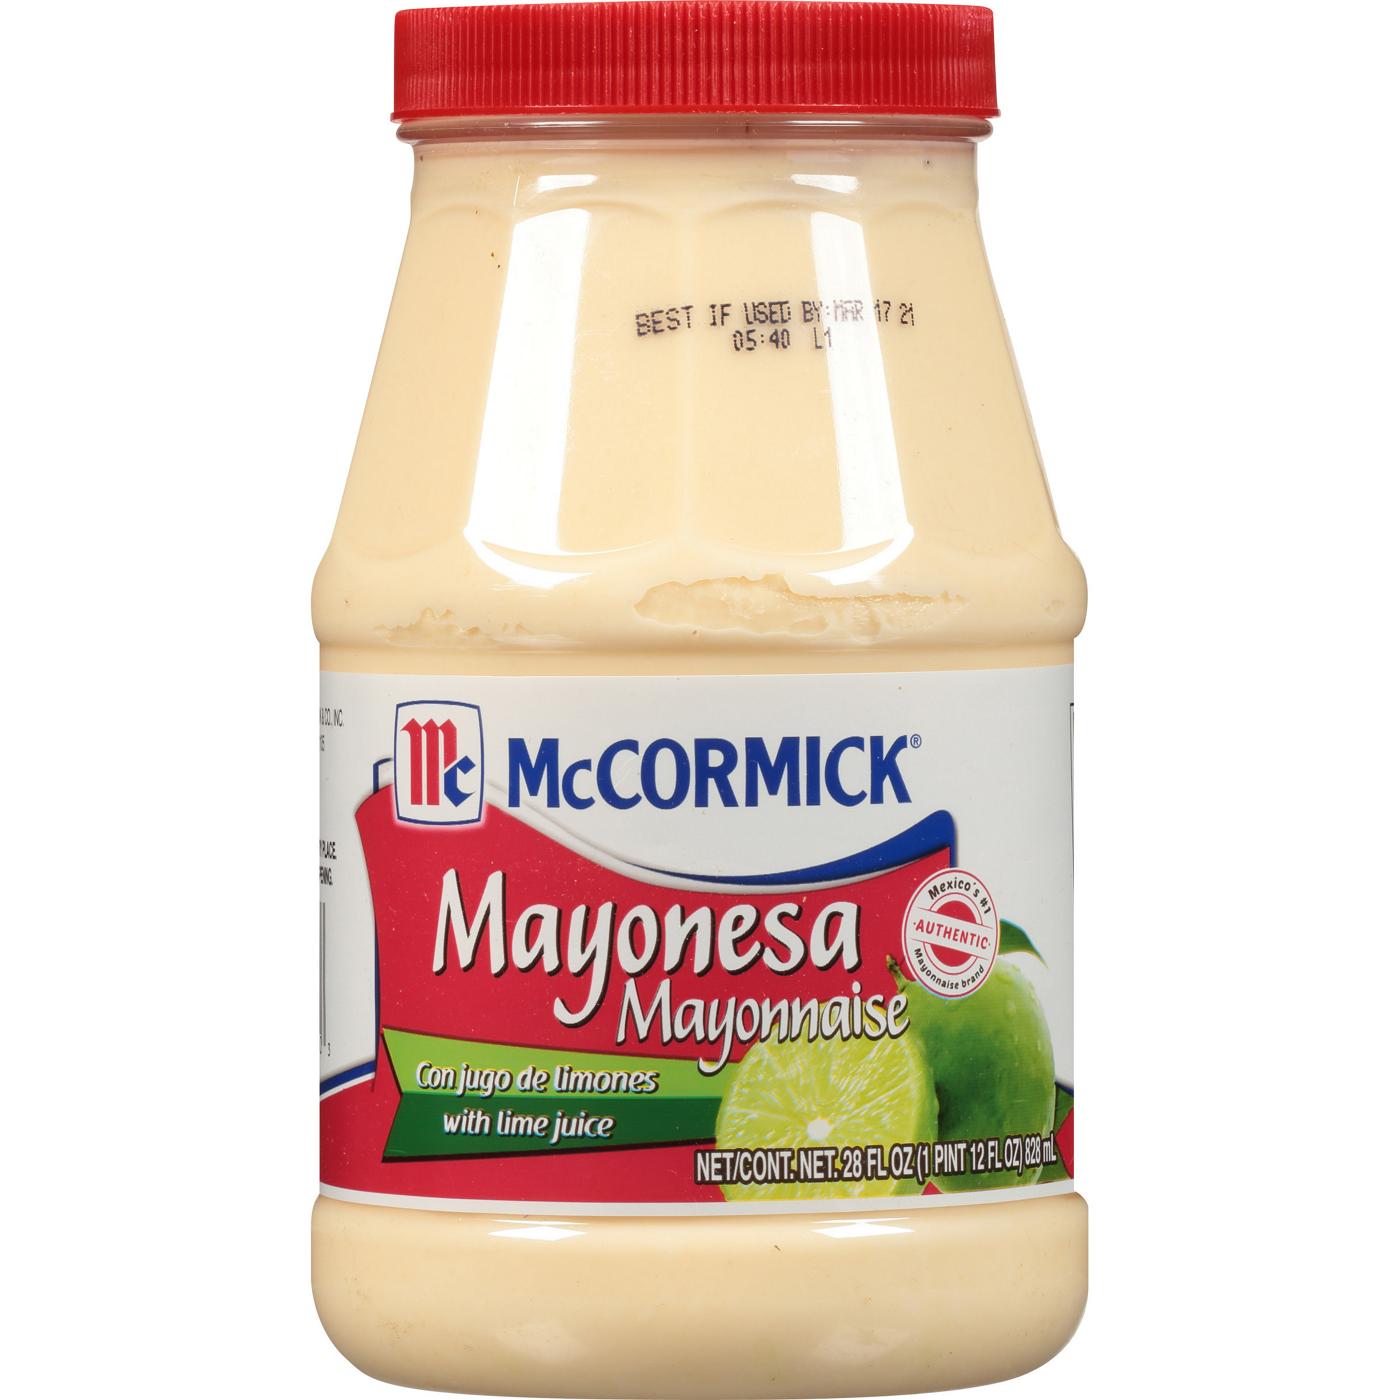 McCormick Mayonesa (Mayonnaise) With Lime Juice; image 1 of 8